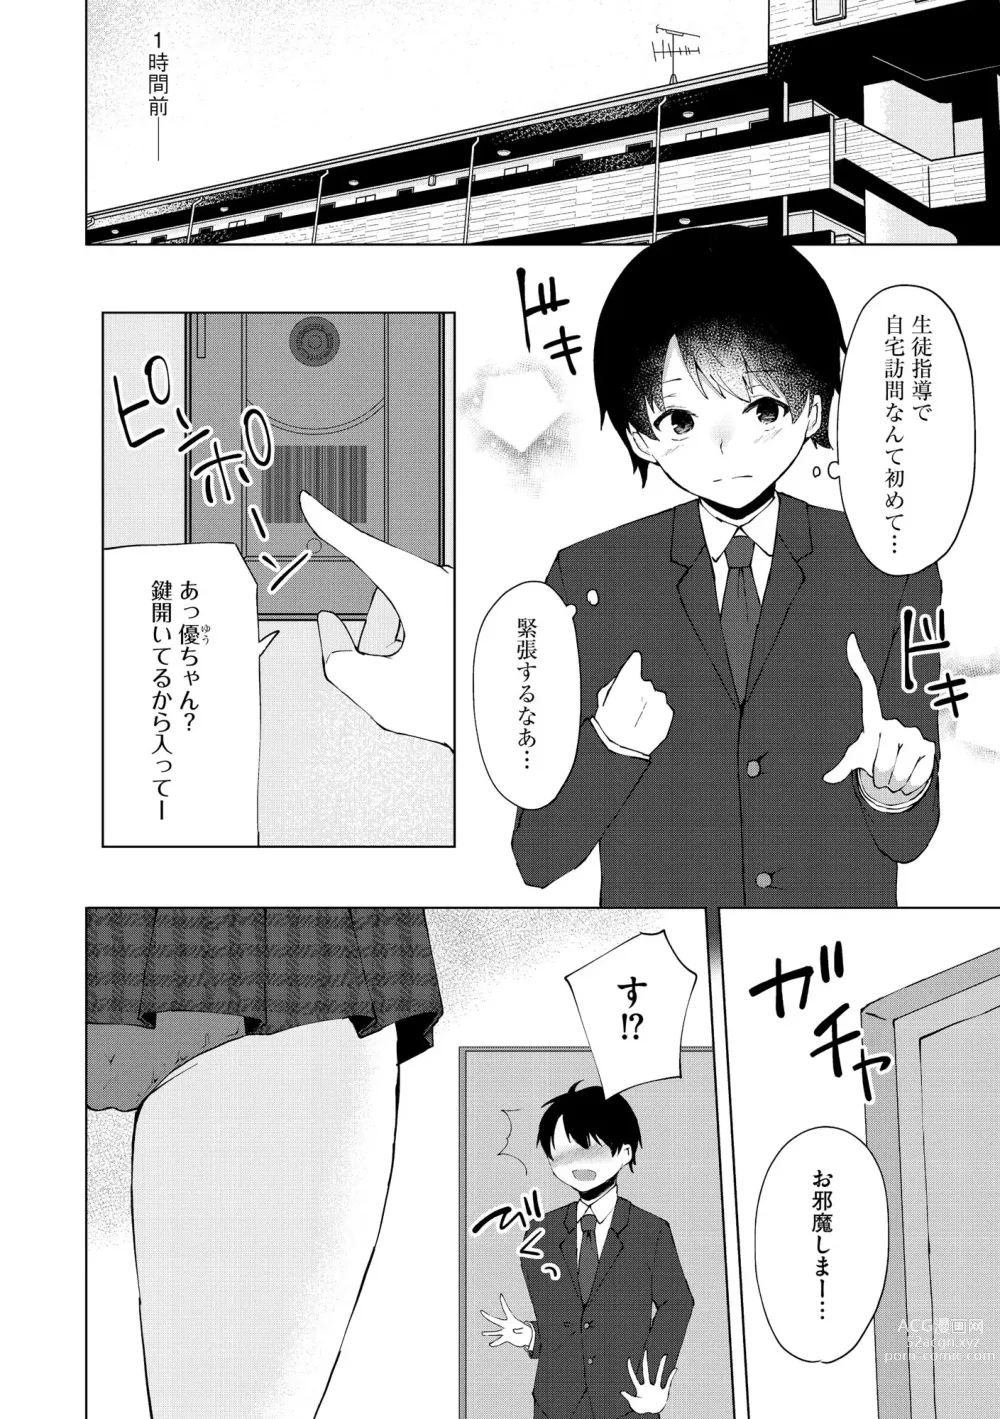 Page 8 of manga Cyberia Plus Vol. 12